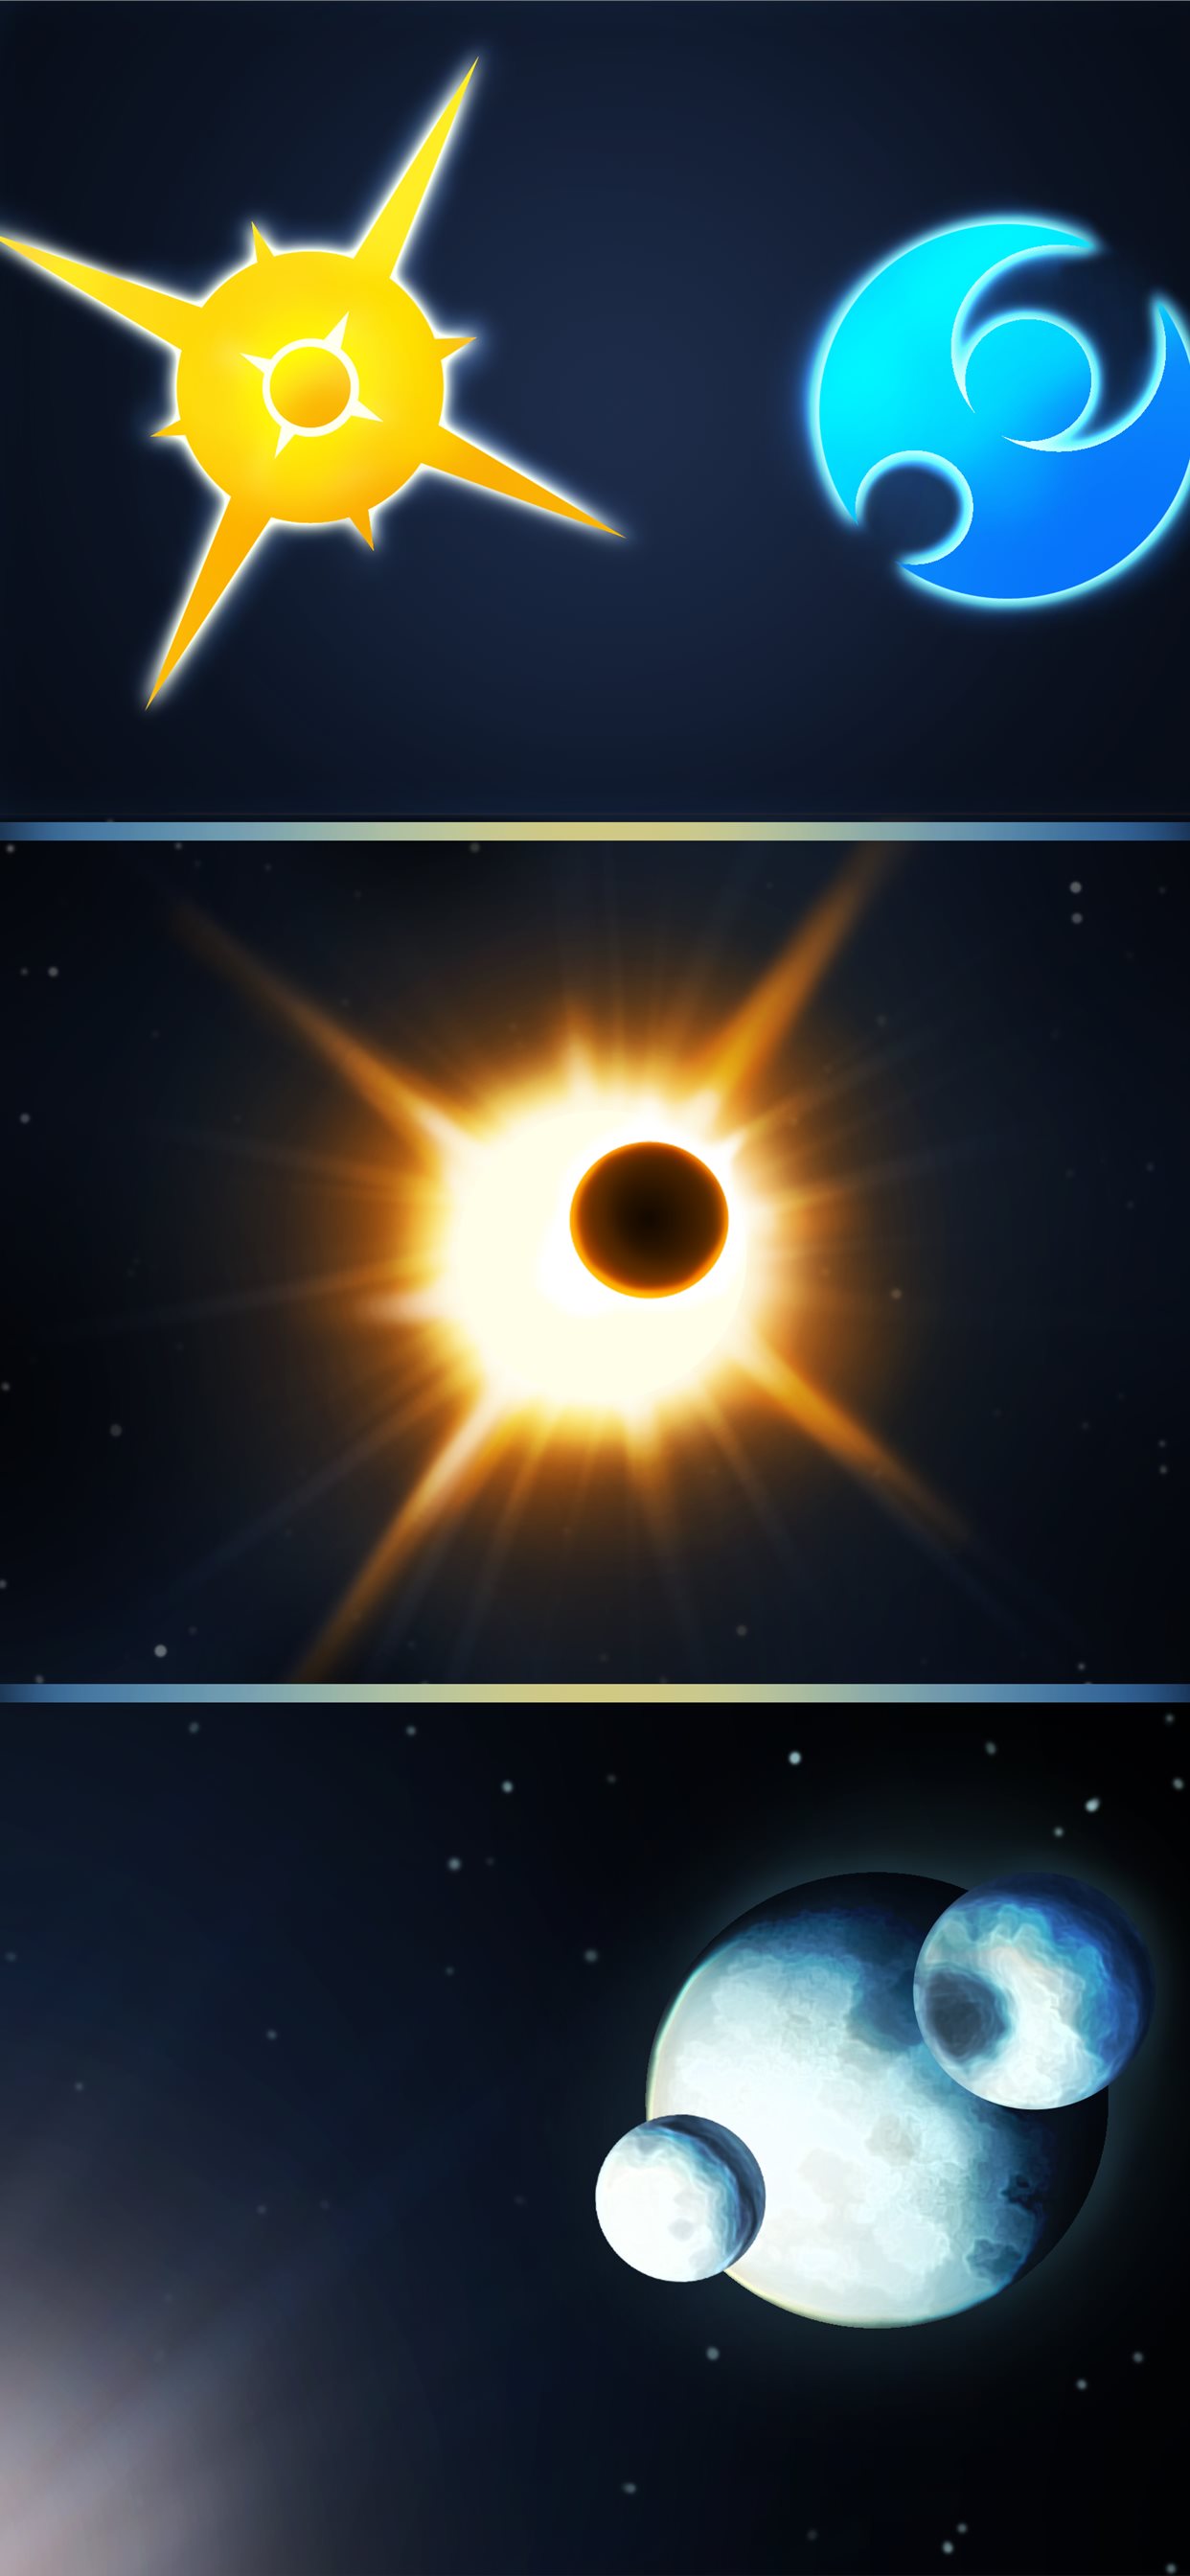 50 Pokemon Sun and Moon on afari iPhone X Wallpapers Free Download